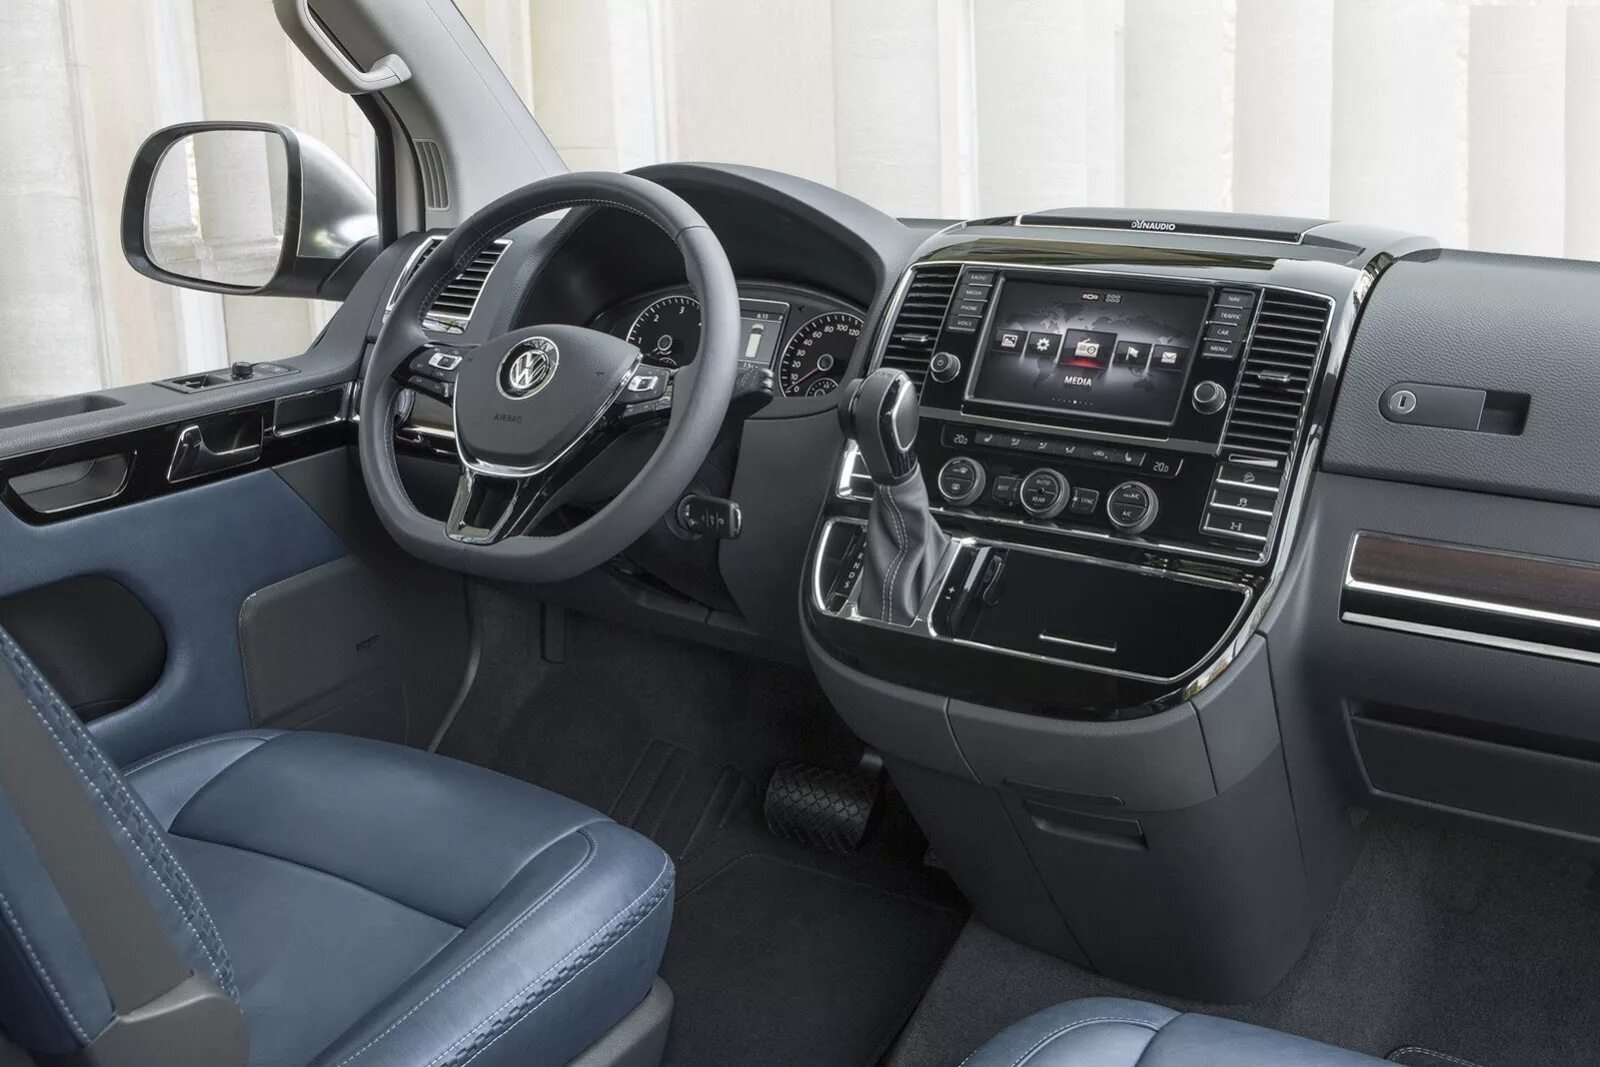 Т 6 2014. Фольксваген Мультивен 2017 салон. Volkswagen Multivan t6 салон. Volkswagen Multivan t5 2014 салон. Volkswagen Caravelle t5 салон.